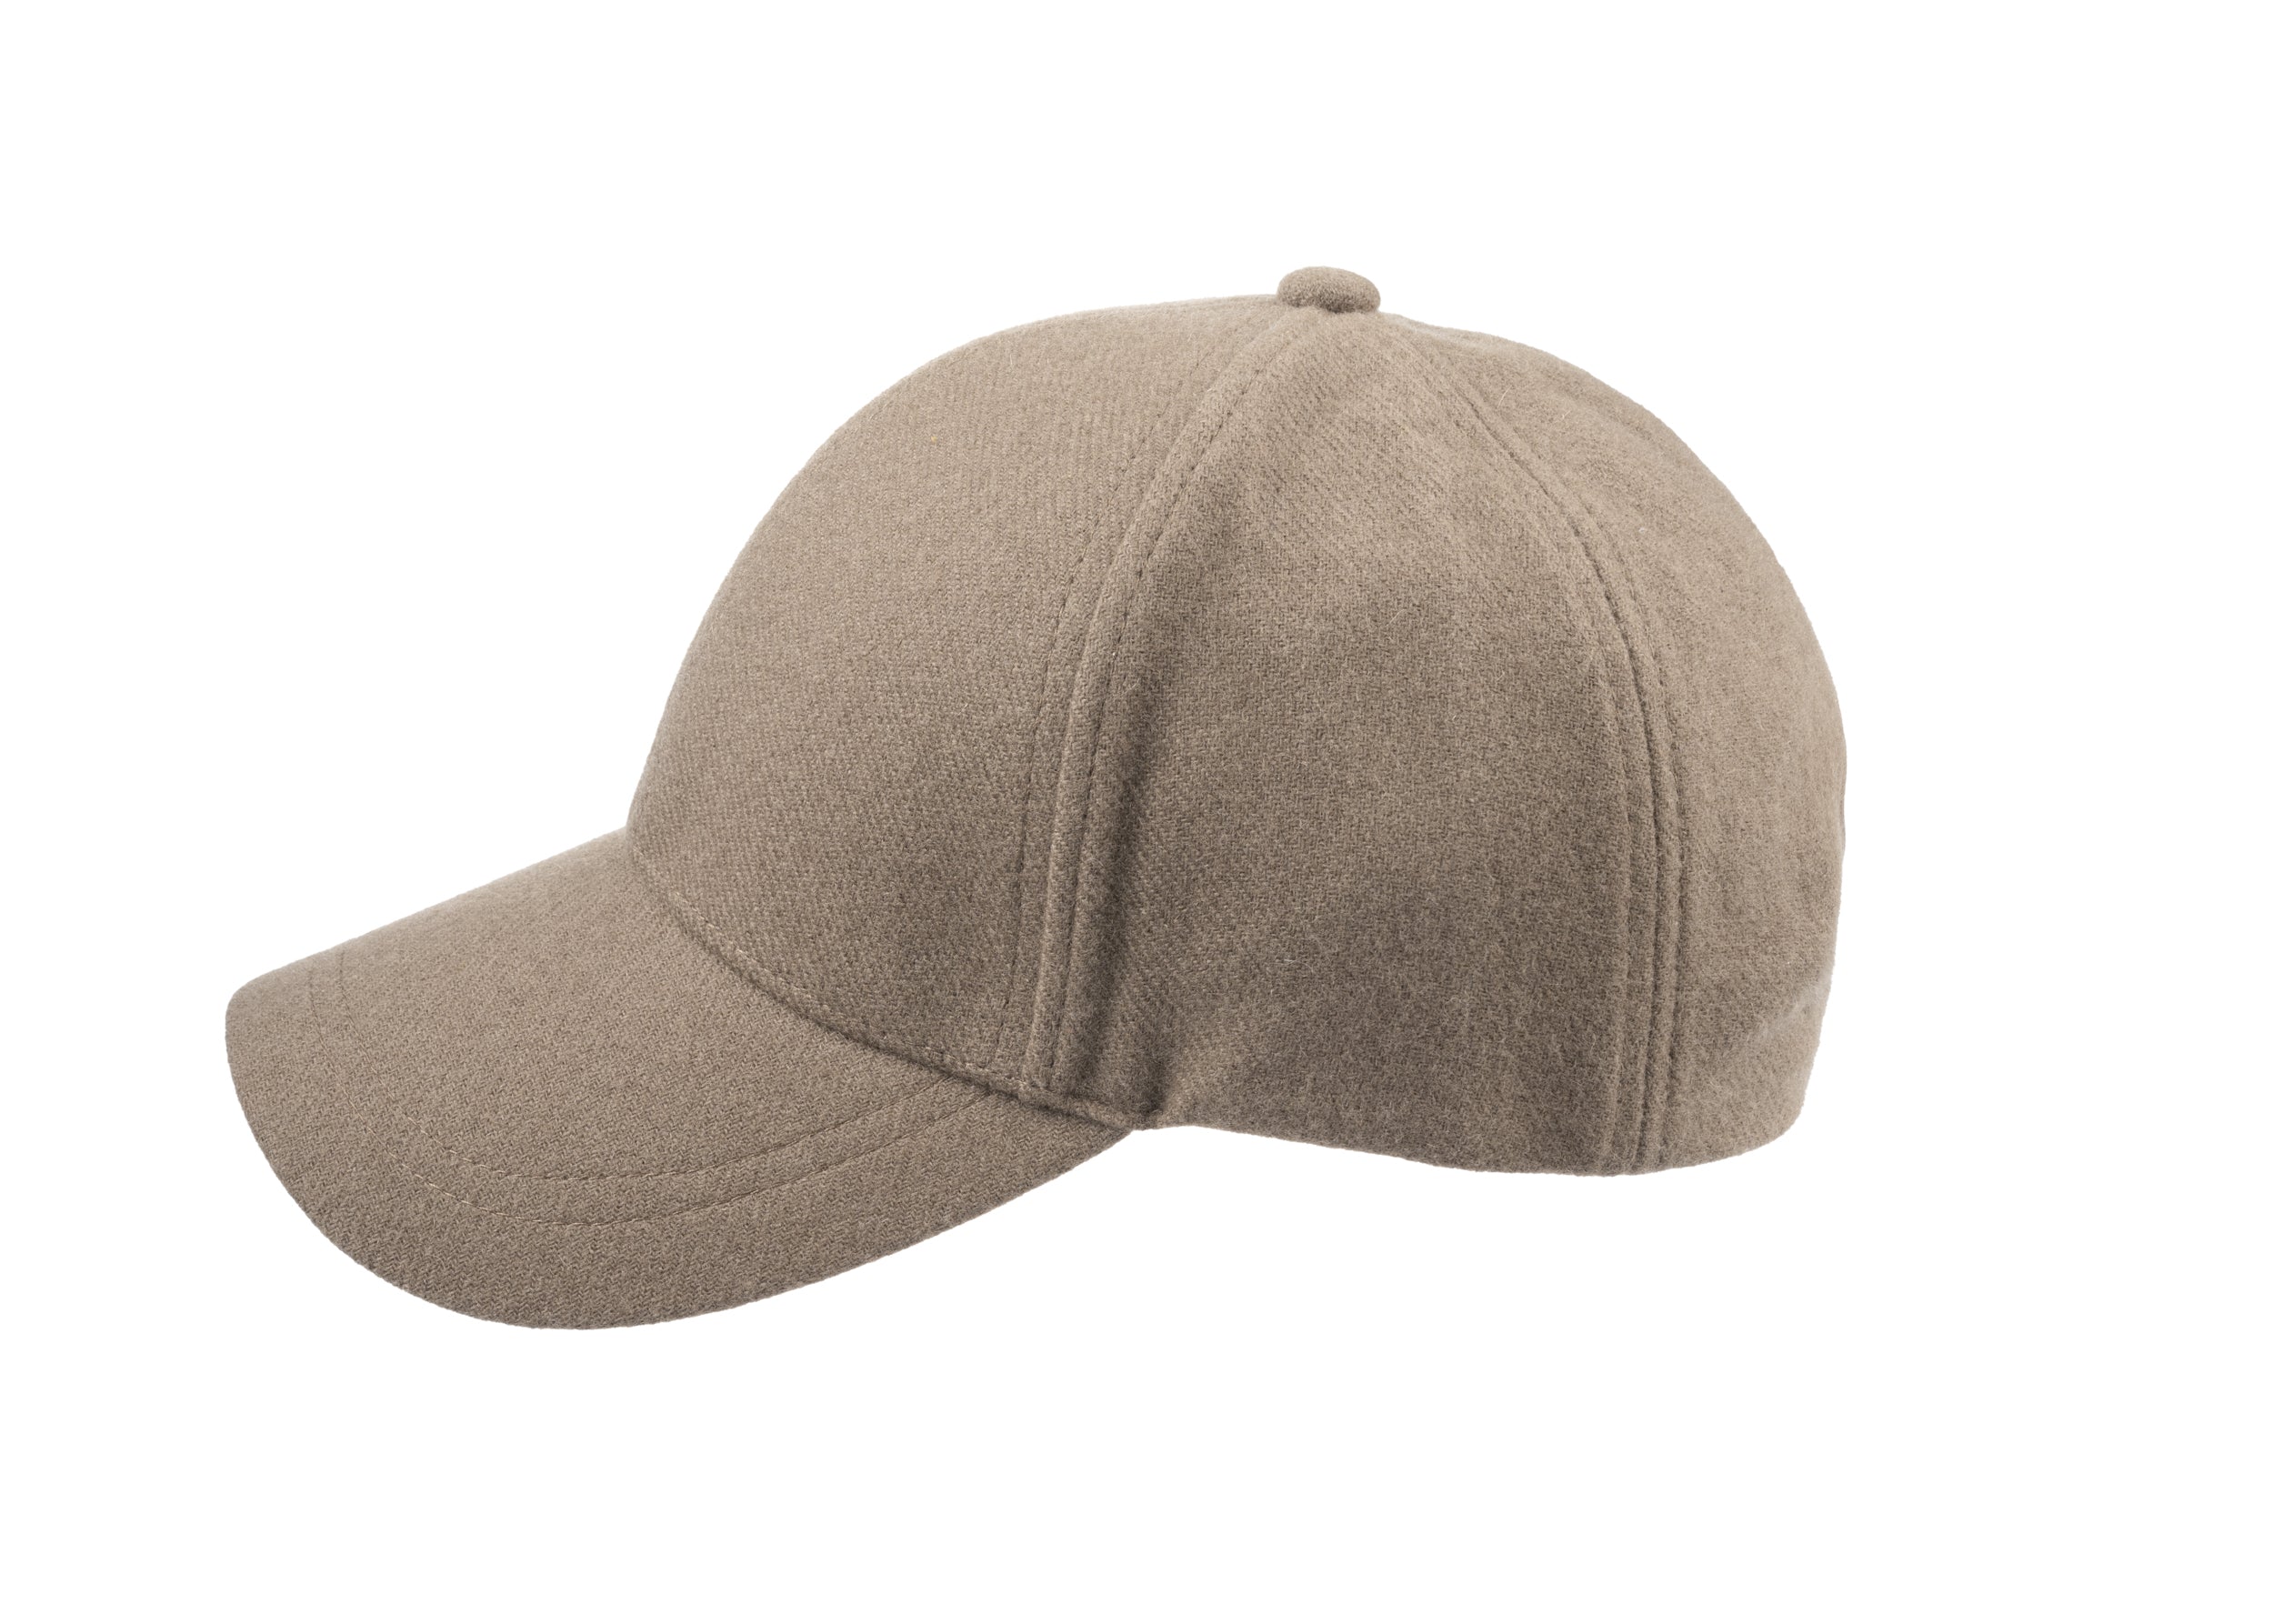 Josh baseball cap in cashmere/wool blend fabric in Light Brown